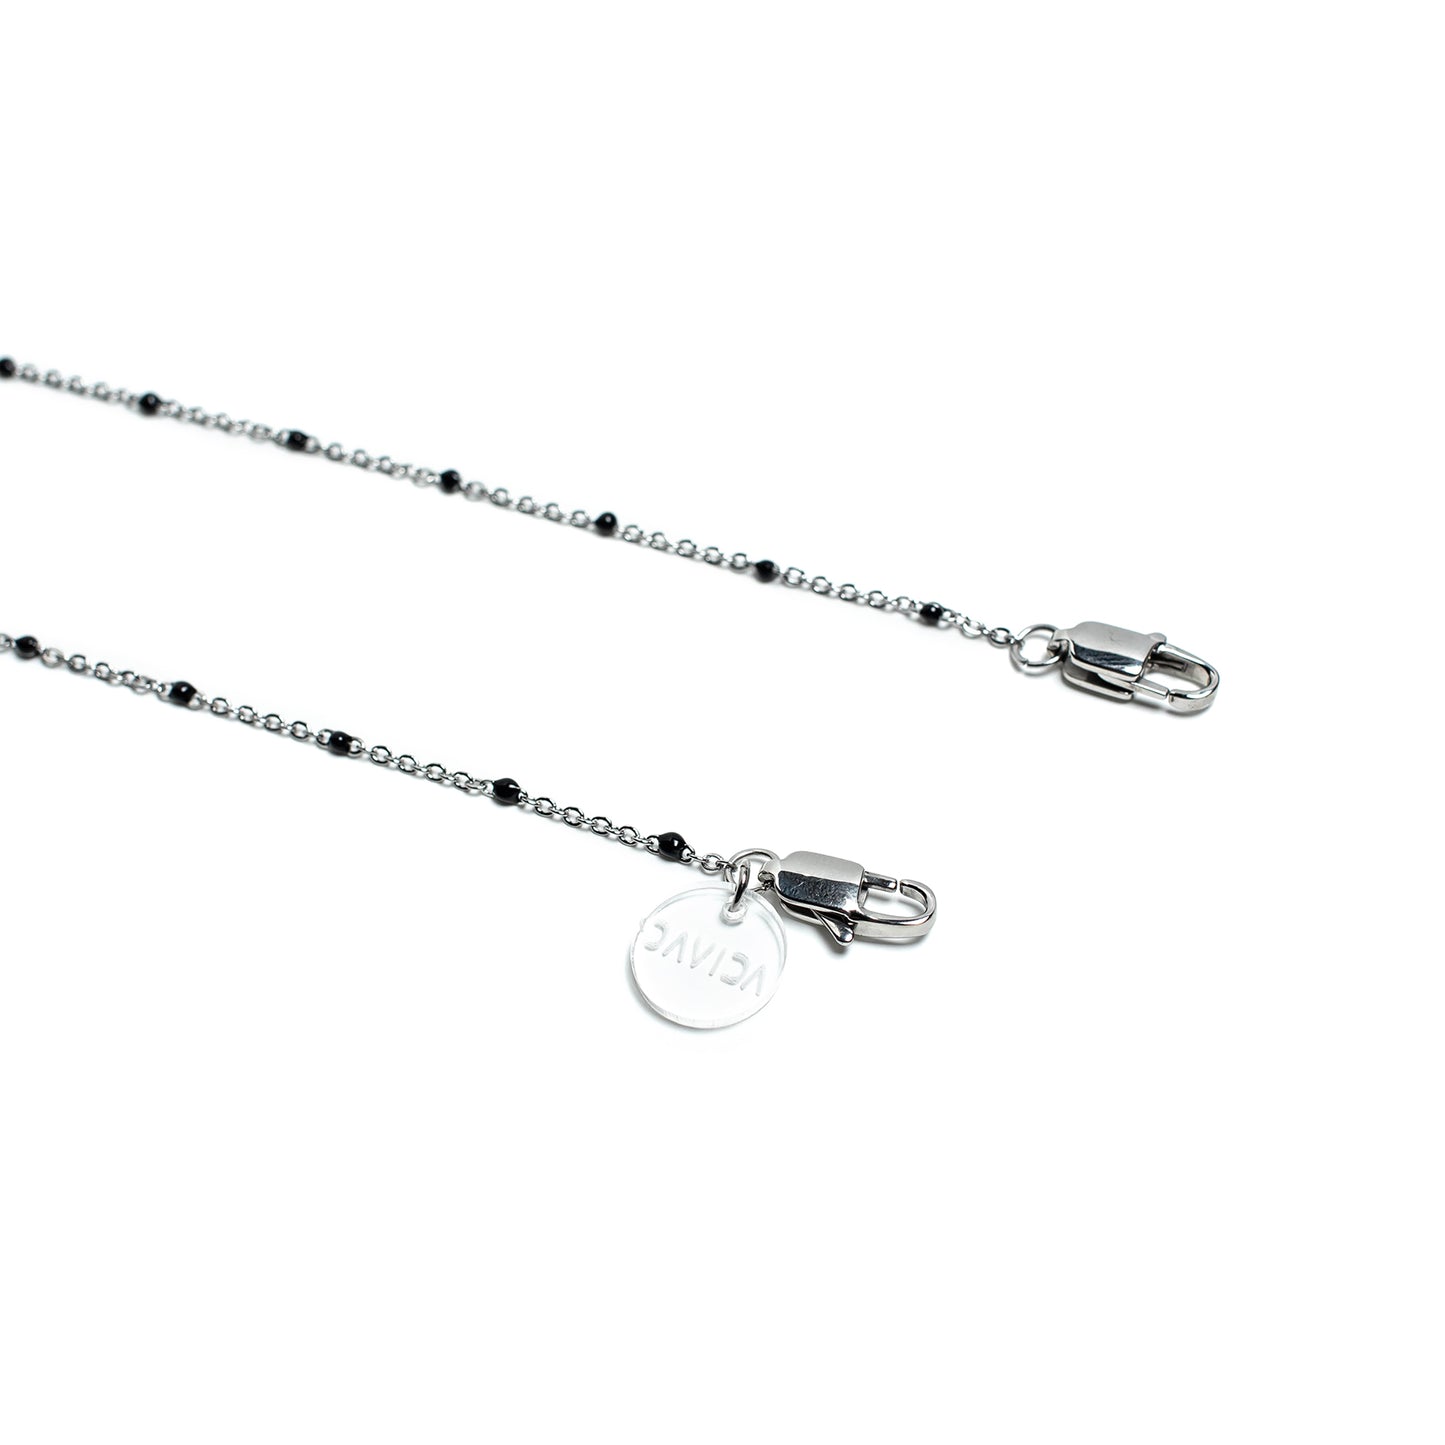 Black Enamel Stainless Steel Chain Mask Holder Necklace